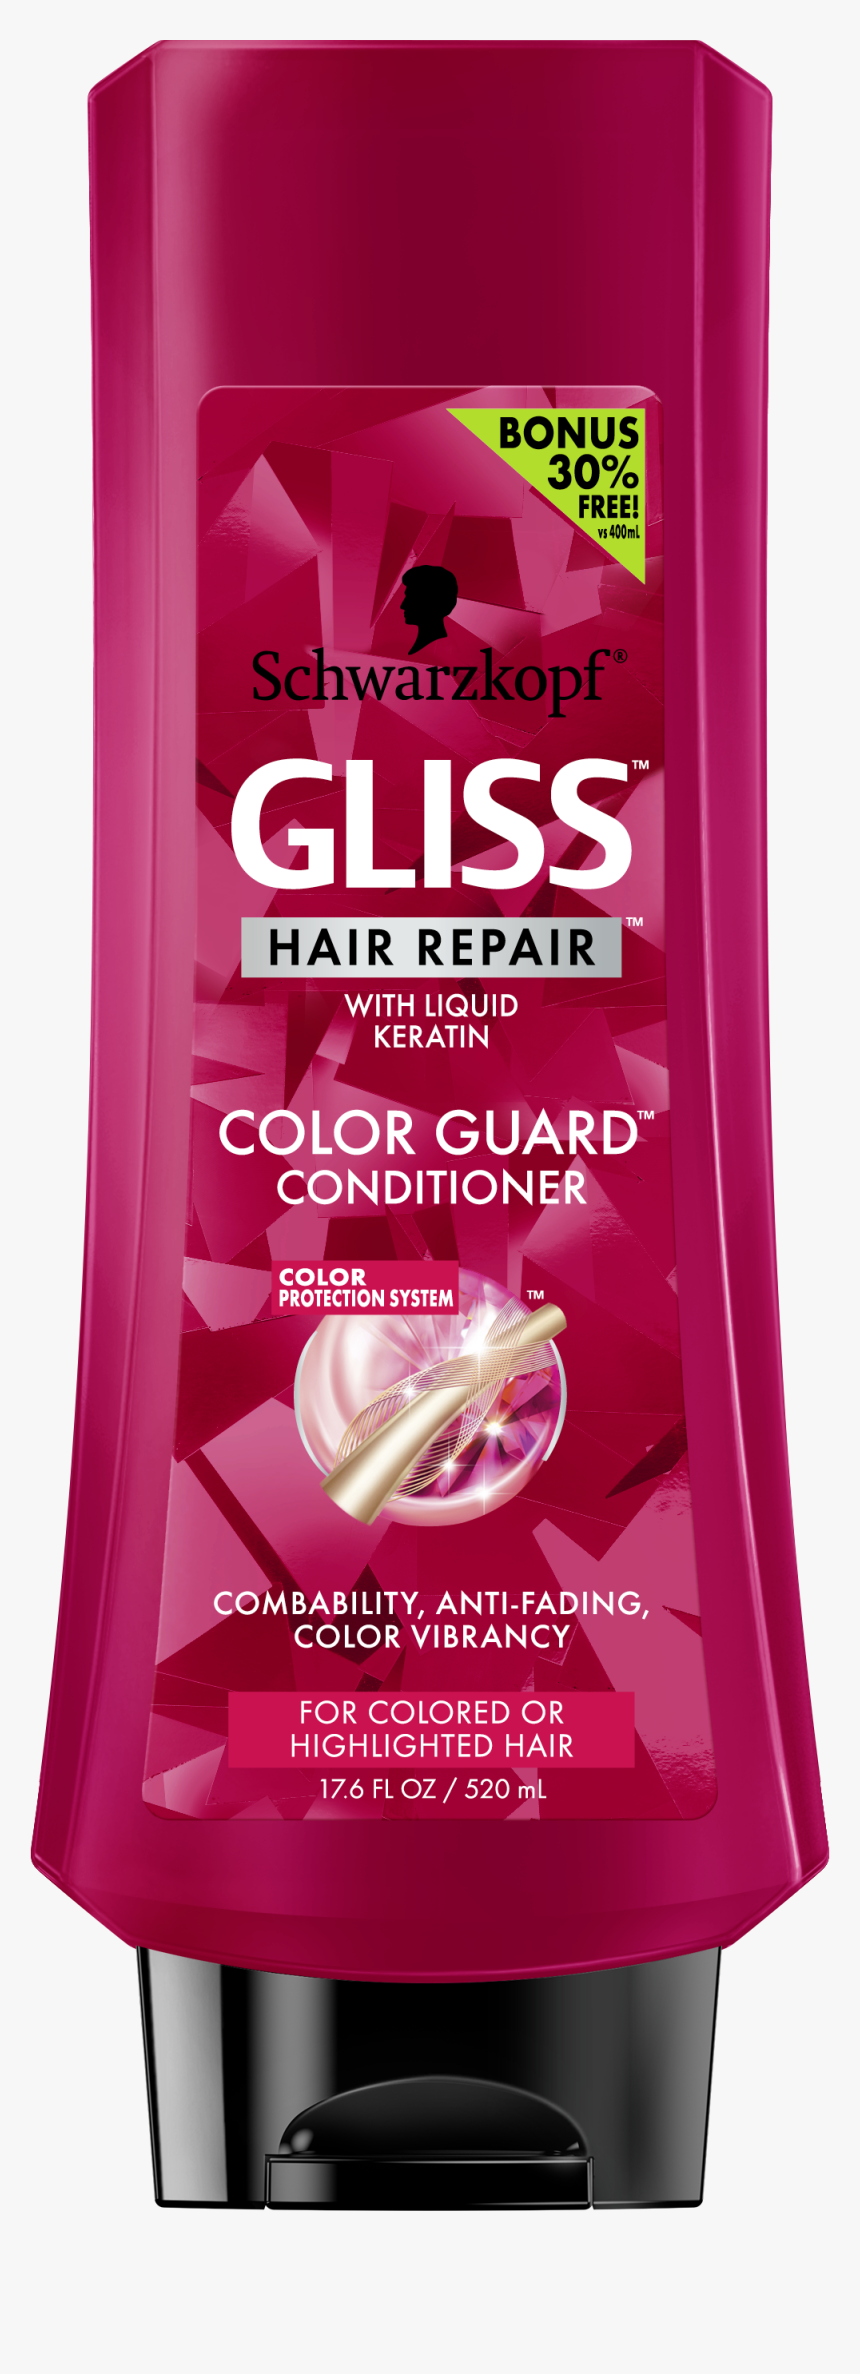 Schwarzkopf Gliss Hair Repair, HD Png Download, Free Download